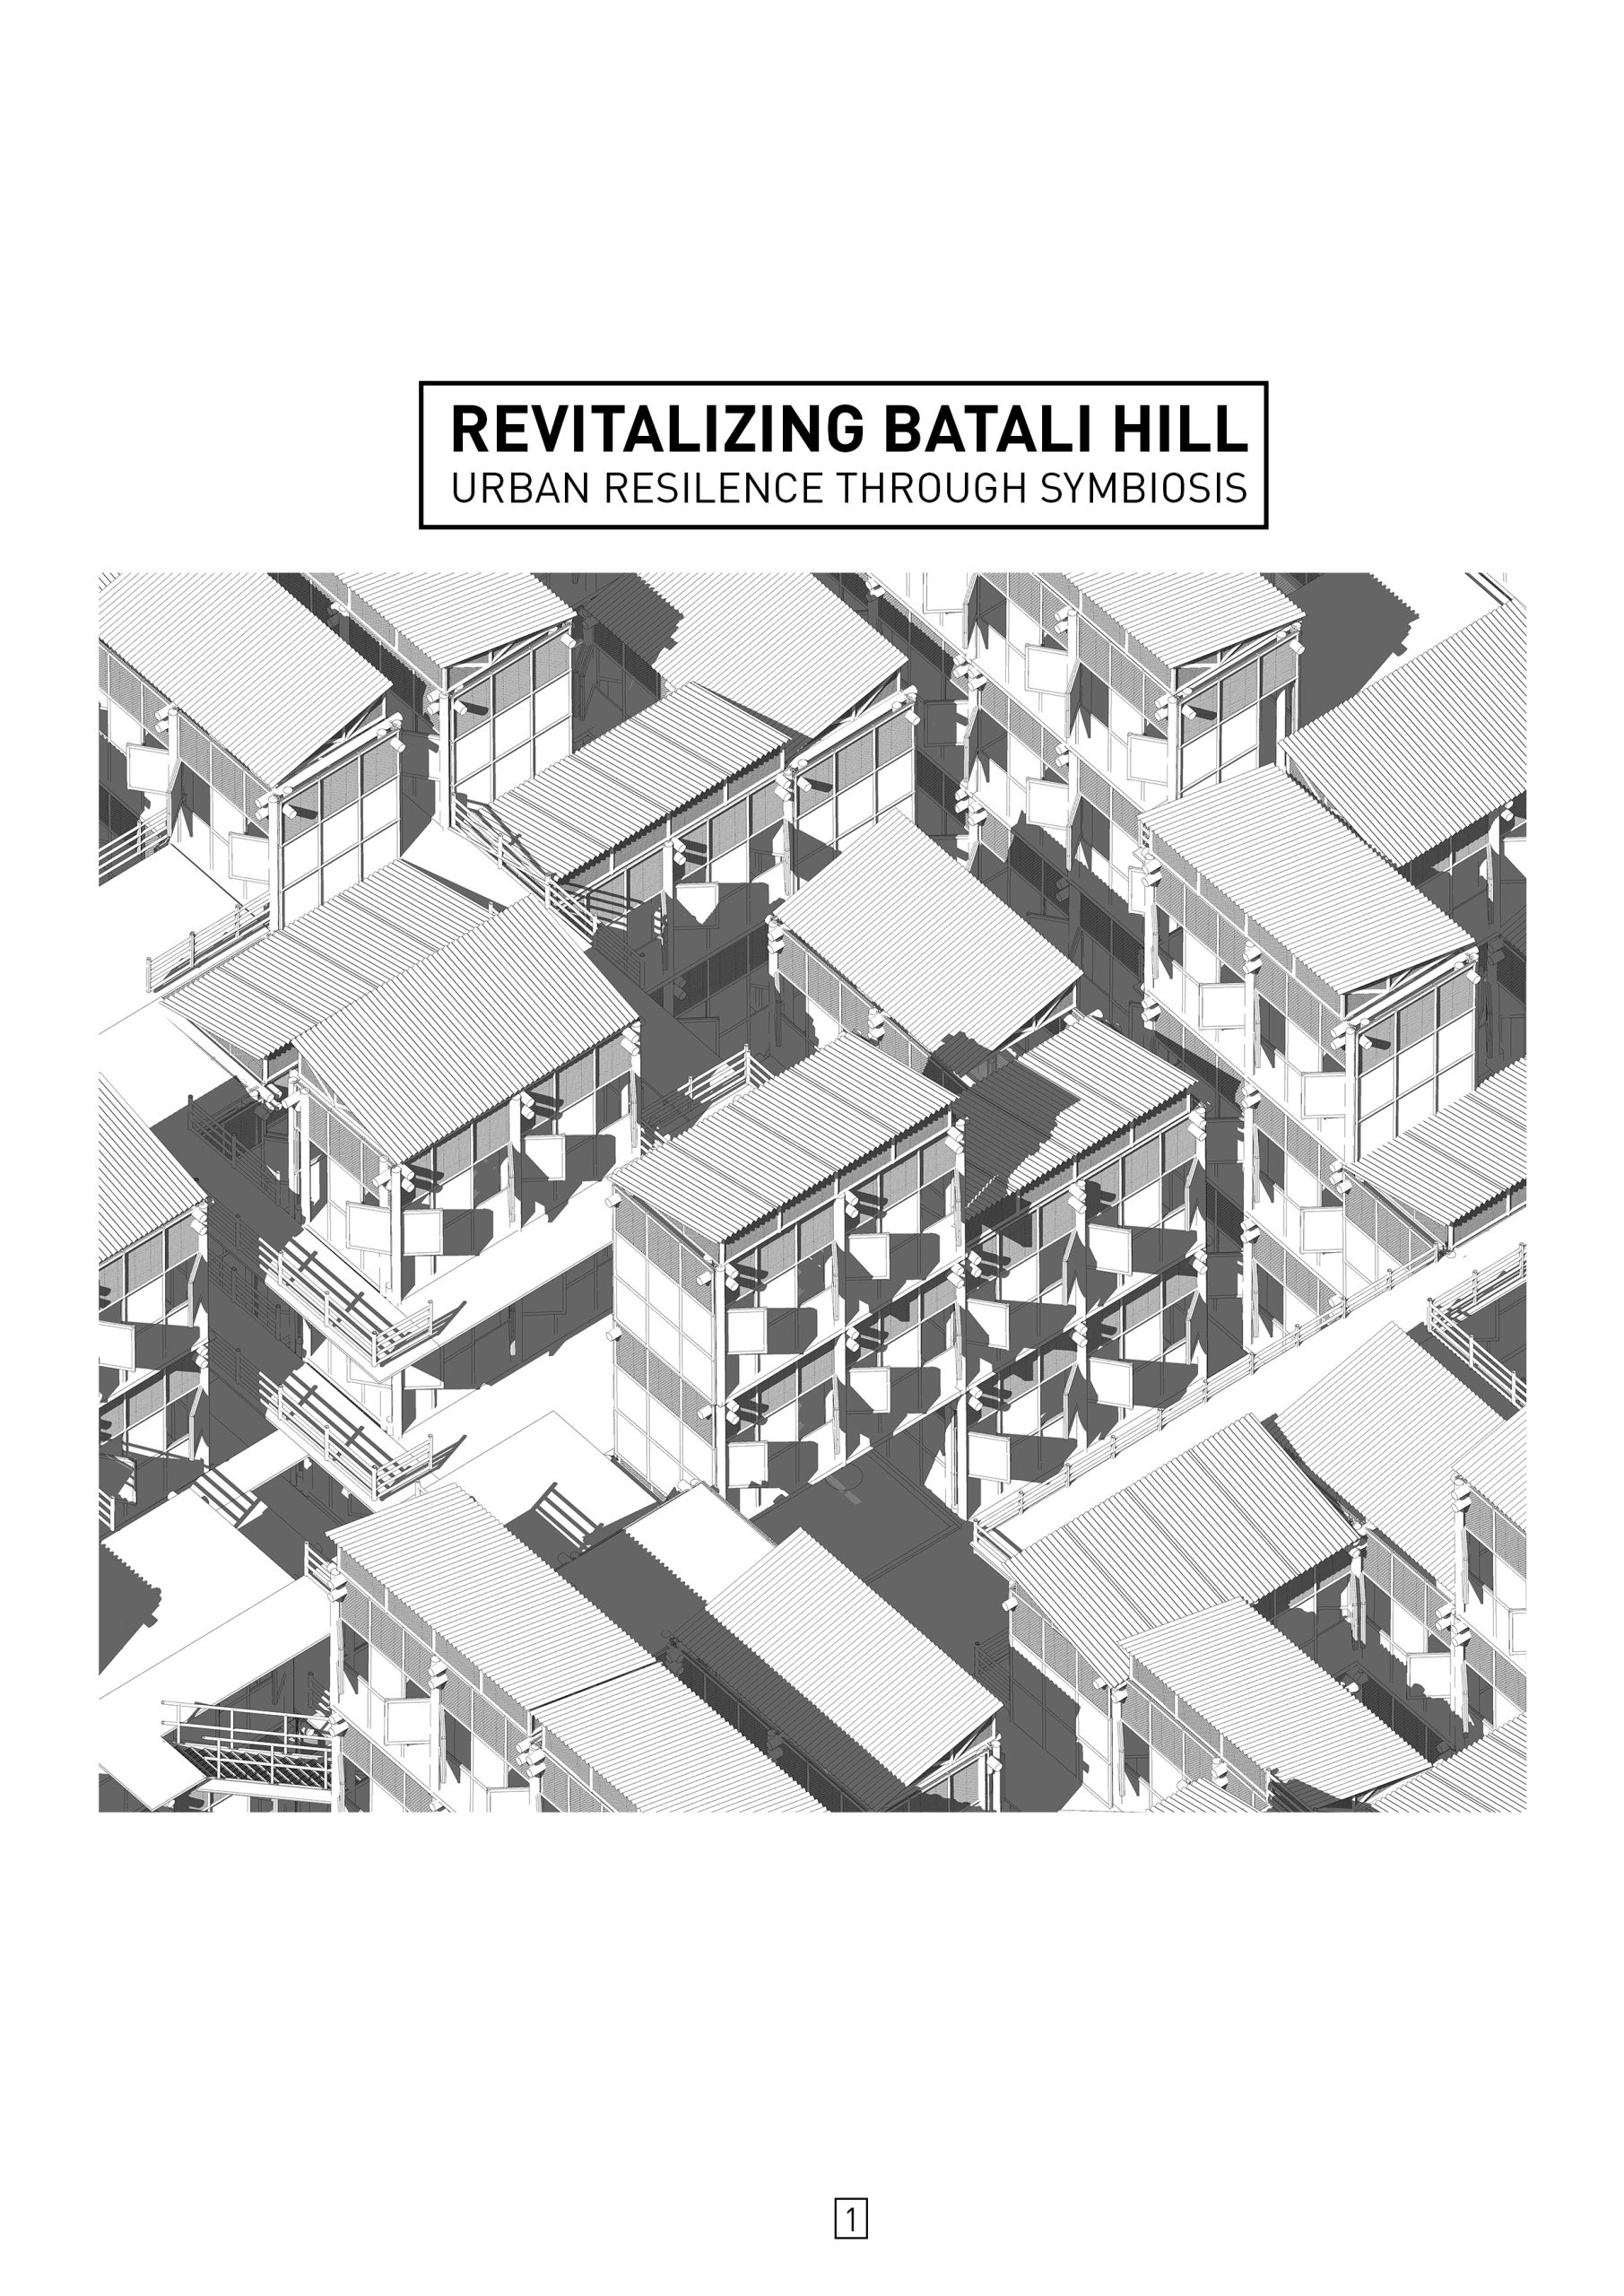 28657_Revitalizing Batali Hill_Image 01